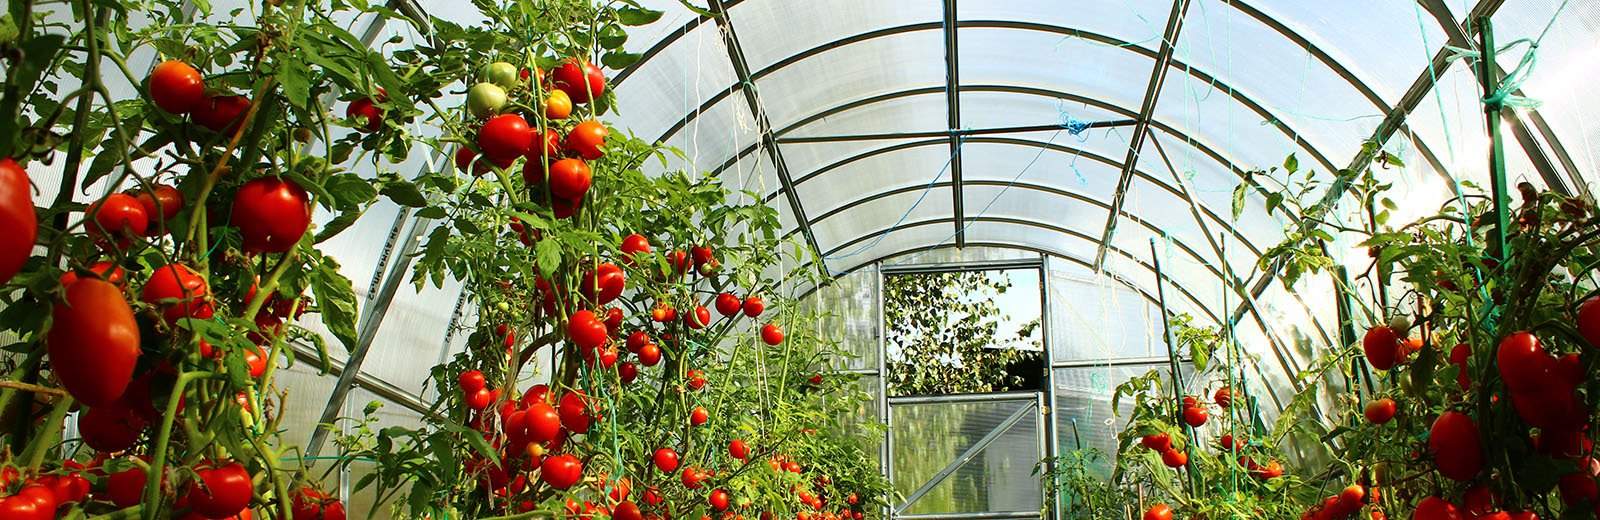 DIY-greenhouse